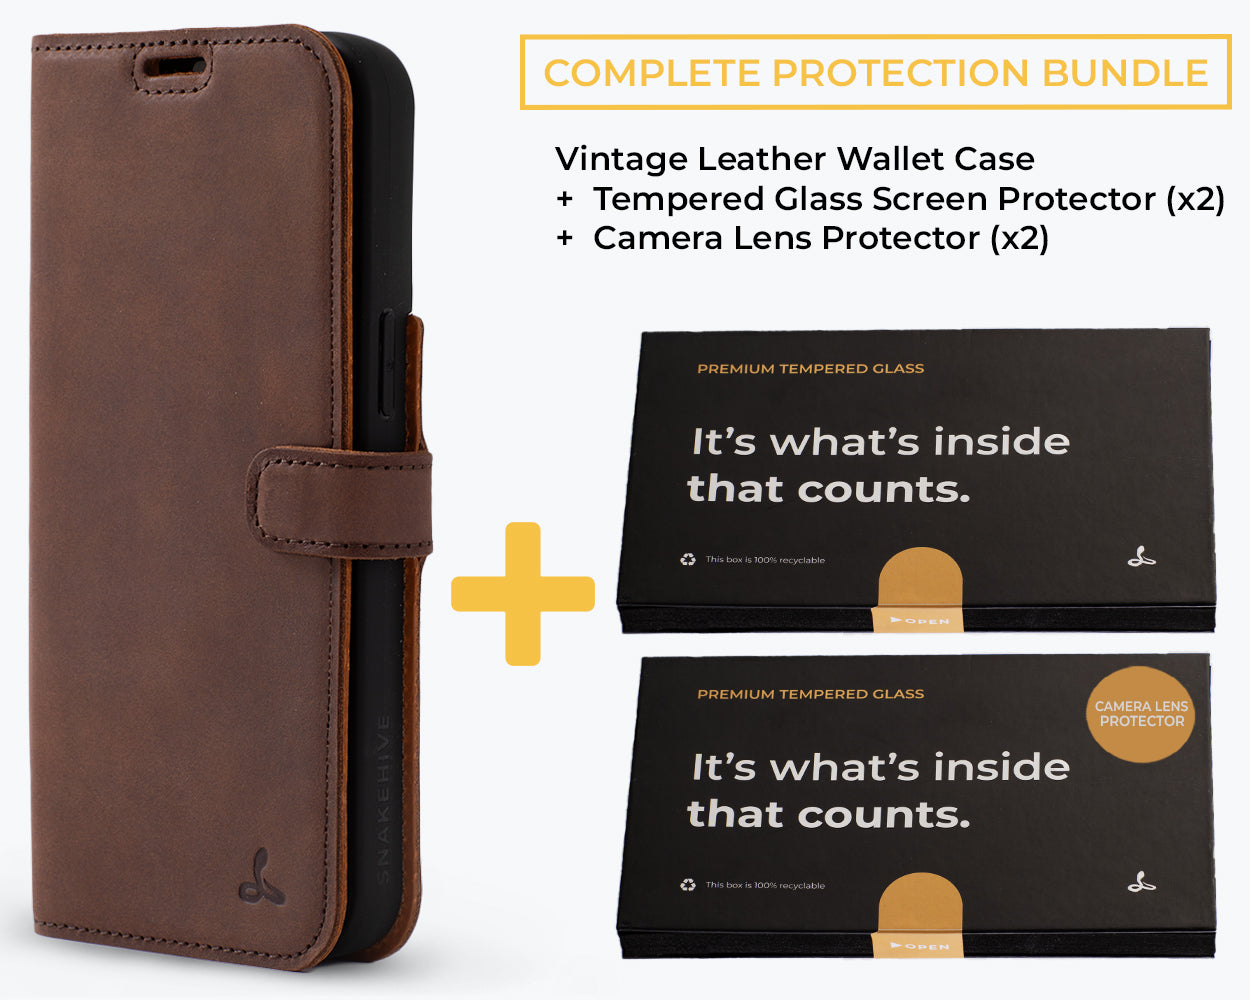 Complete Protection Bundle (Vintage Wallet) - Samsung Galaxy S22